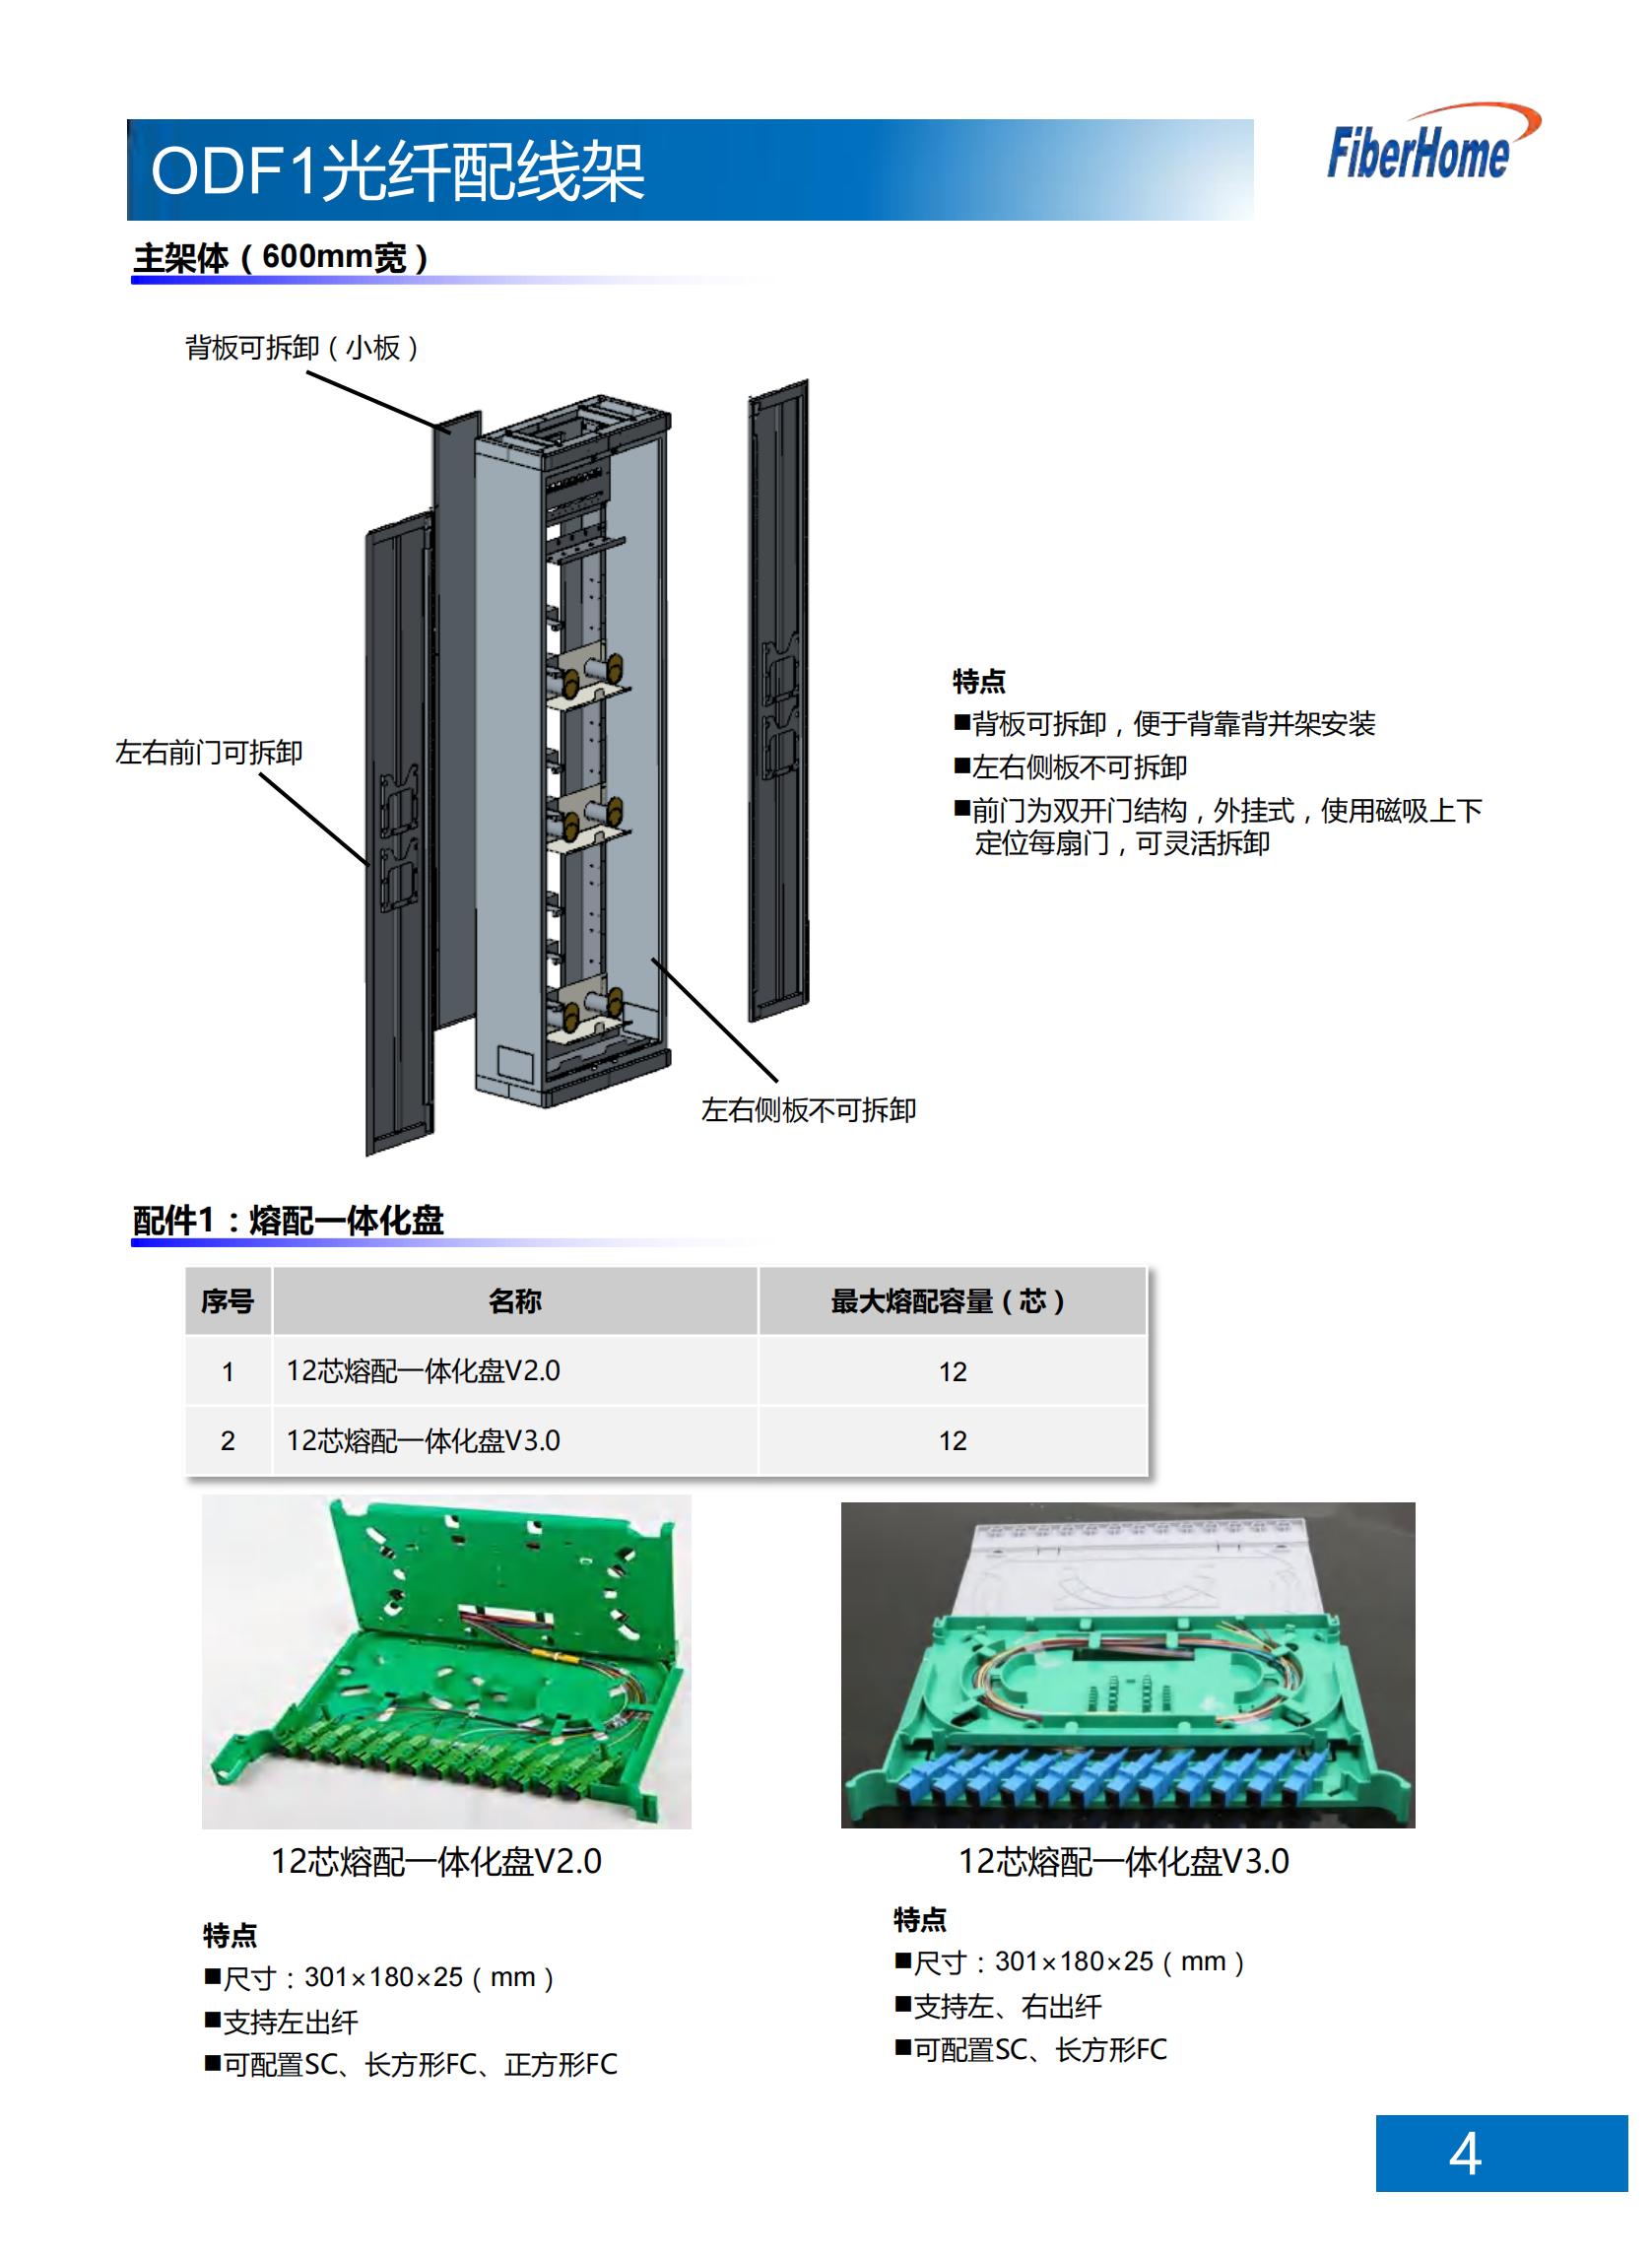 ODF101-576-A3-SC ODF光纤配线架 （576芯落地式 无子框型 全部含12芯SC熔配一体化单元）